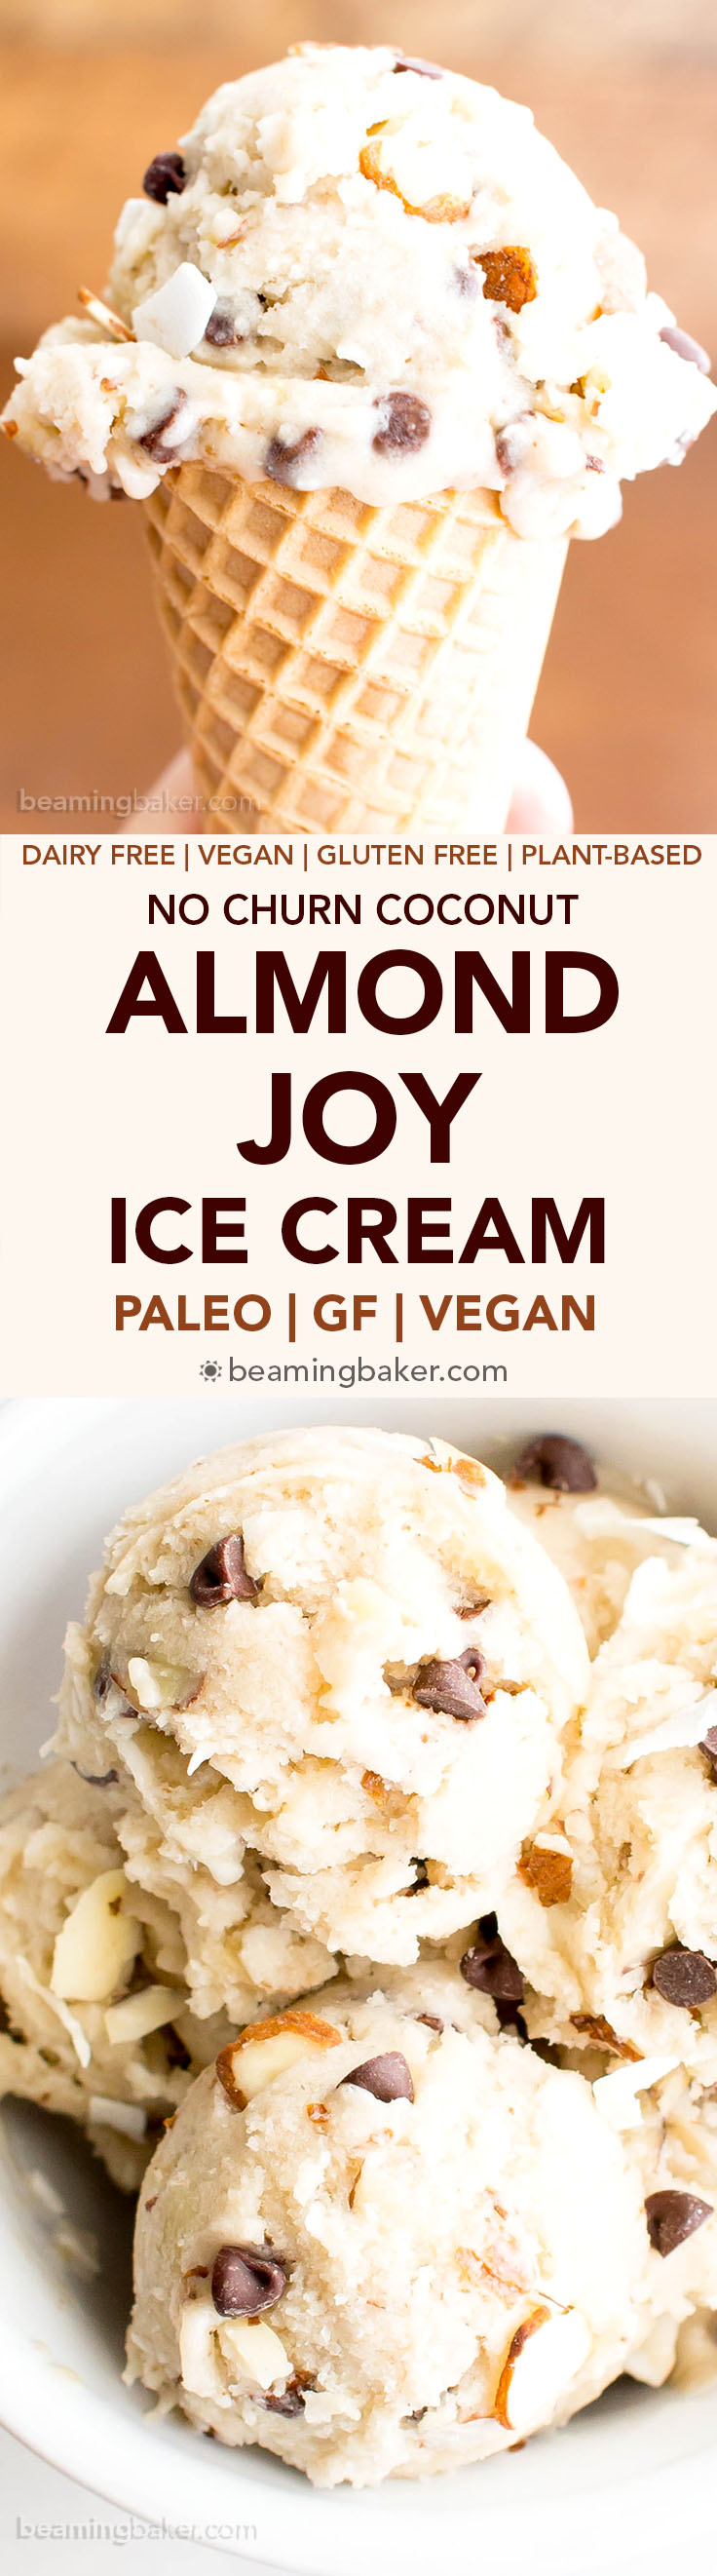 Almond Joy Vegan Paleo Ice Cream Recipe (Refined Sugar-Free): this gluten free dairy free ice cream is bursting with coconut, chocolate and Almond JOY flavors! Easy, No Churn, Delicious. #Paleo #Vegan #IceCream #AlmondJoy #DairyFree | Recipe at BeamingBaker.com